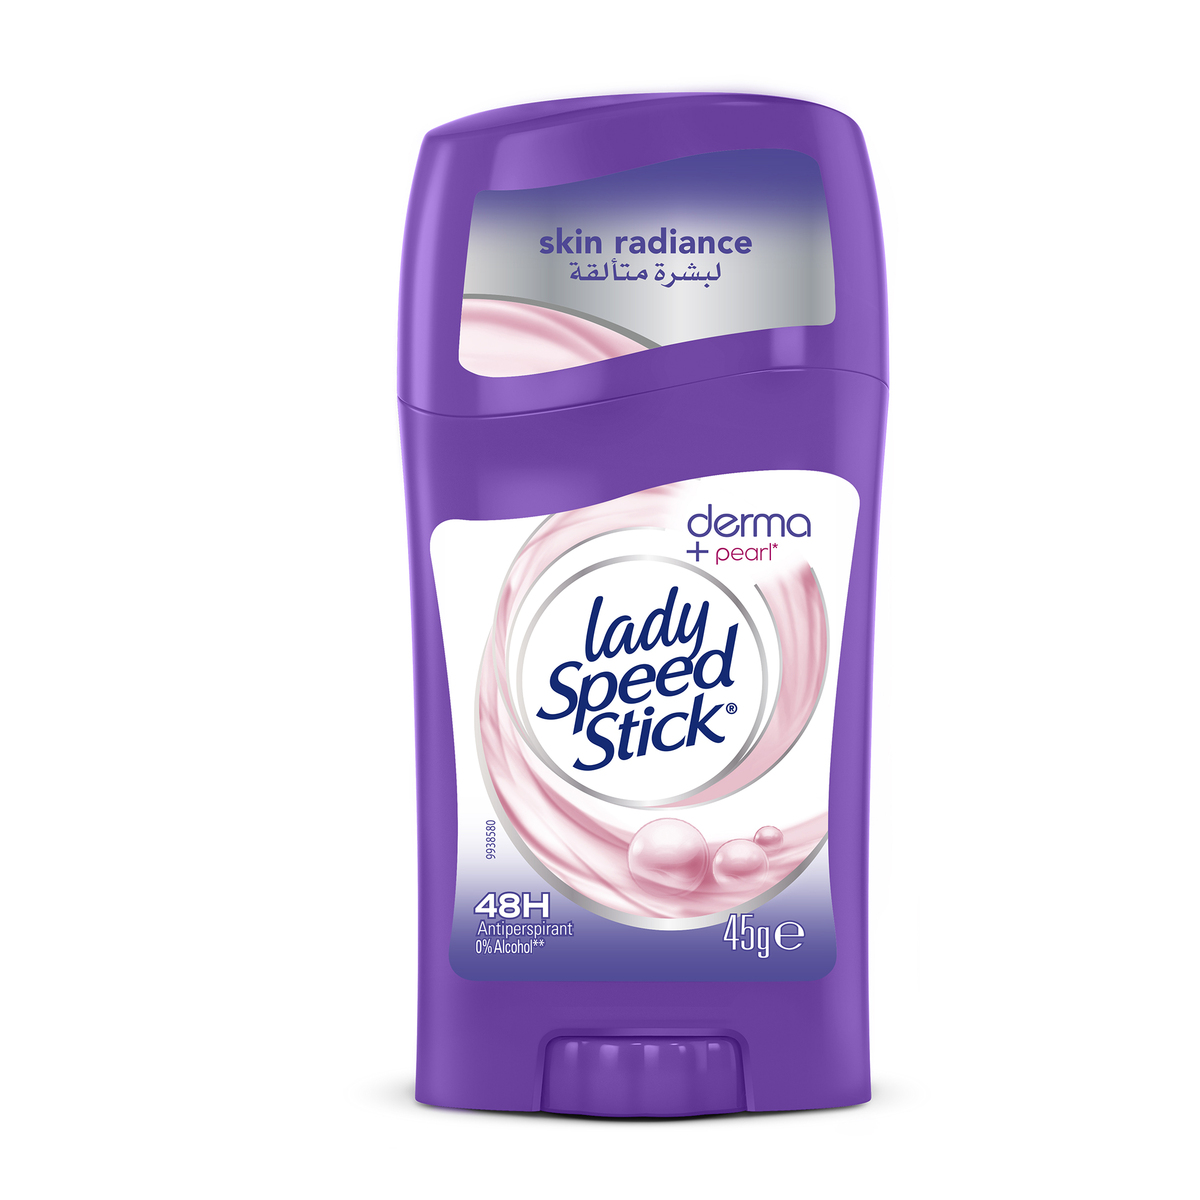 Lady Speed Stick Derma Sticks Anti-Perspirant Deodorant Radiant Skin Appearance Pearl 45 g